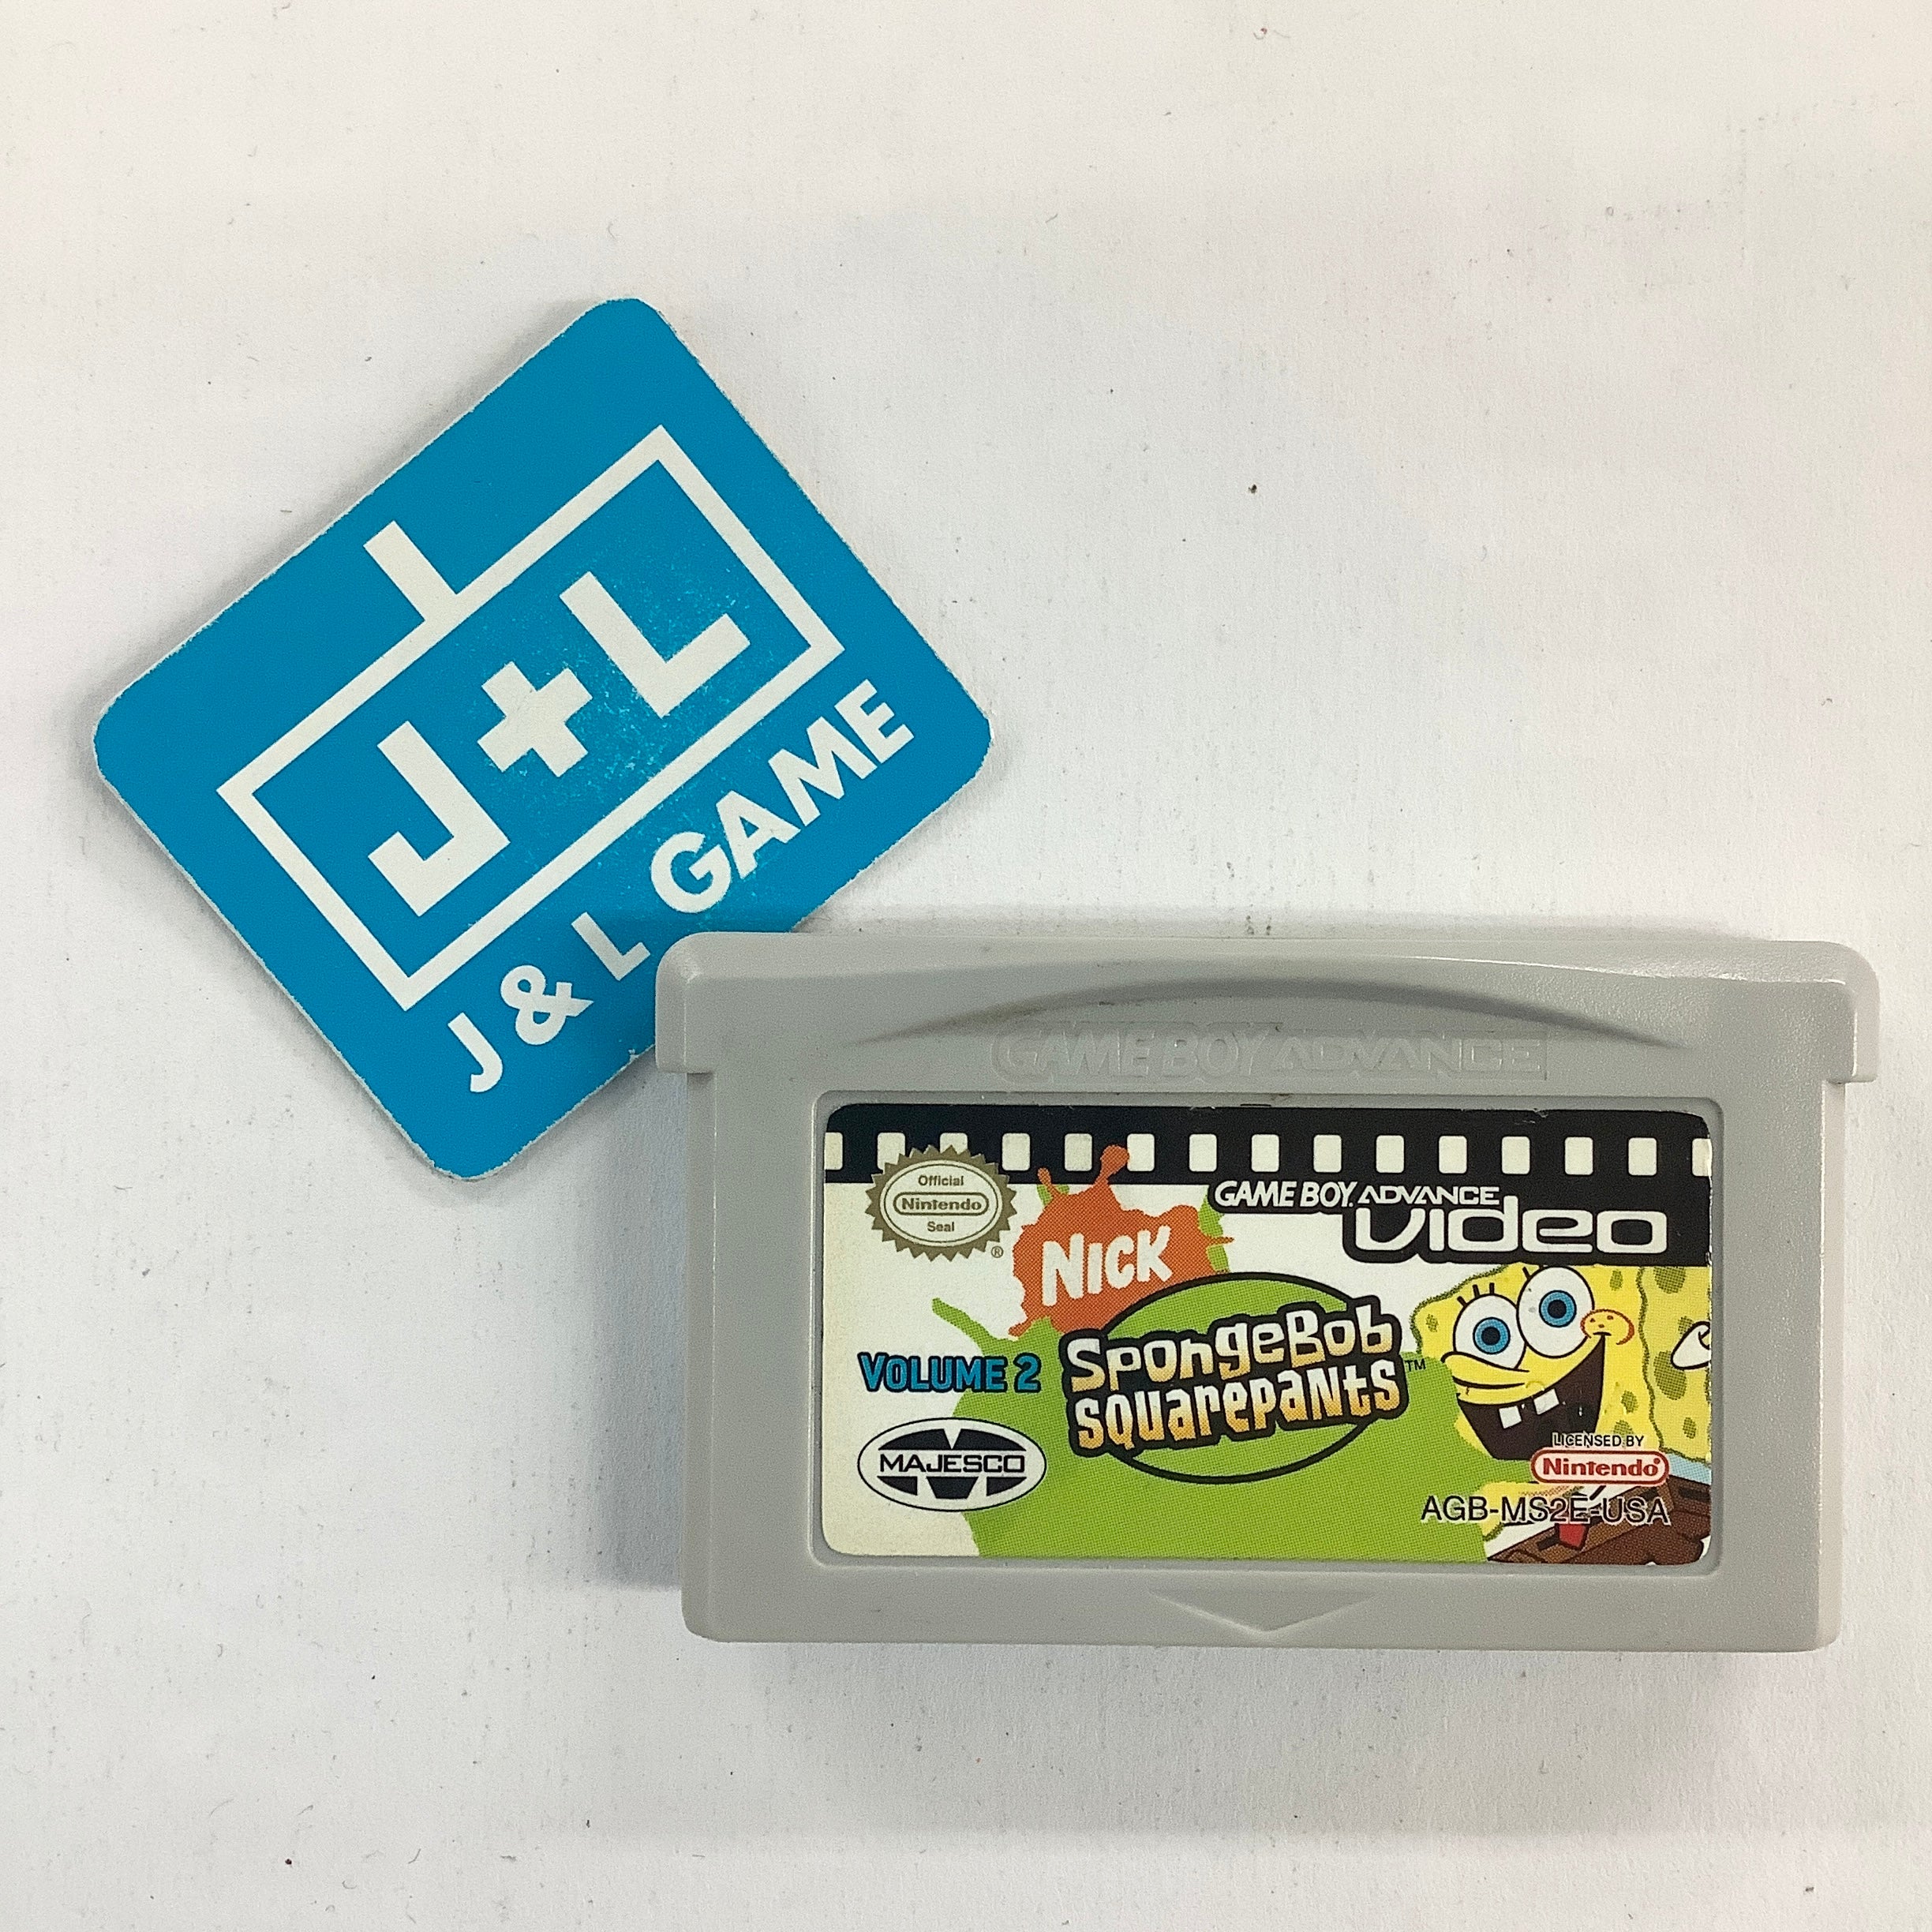 Game Boy Advance Video: SpongeBob SquarePants Volume 2 - (GBA) Game Boy Advance [Pre-Owned] Video Games Majesco   